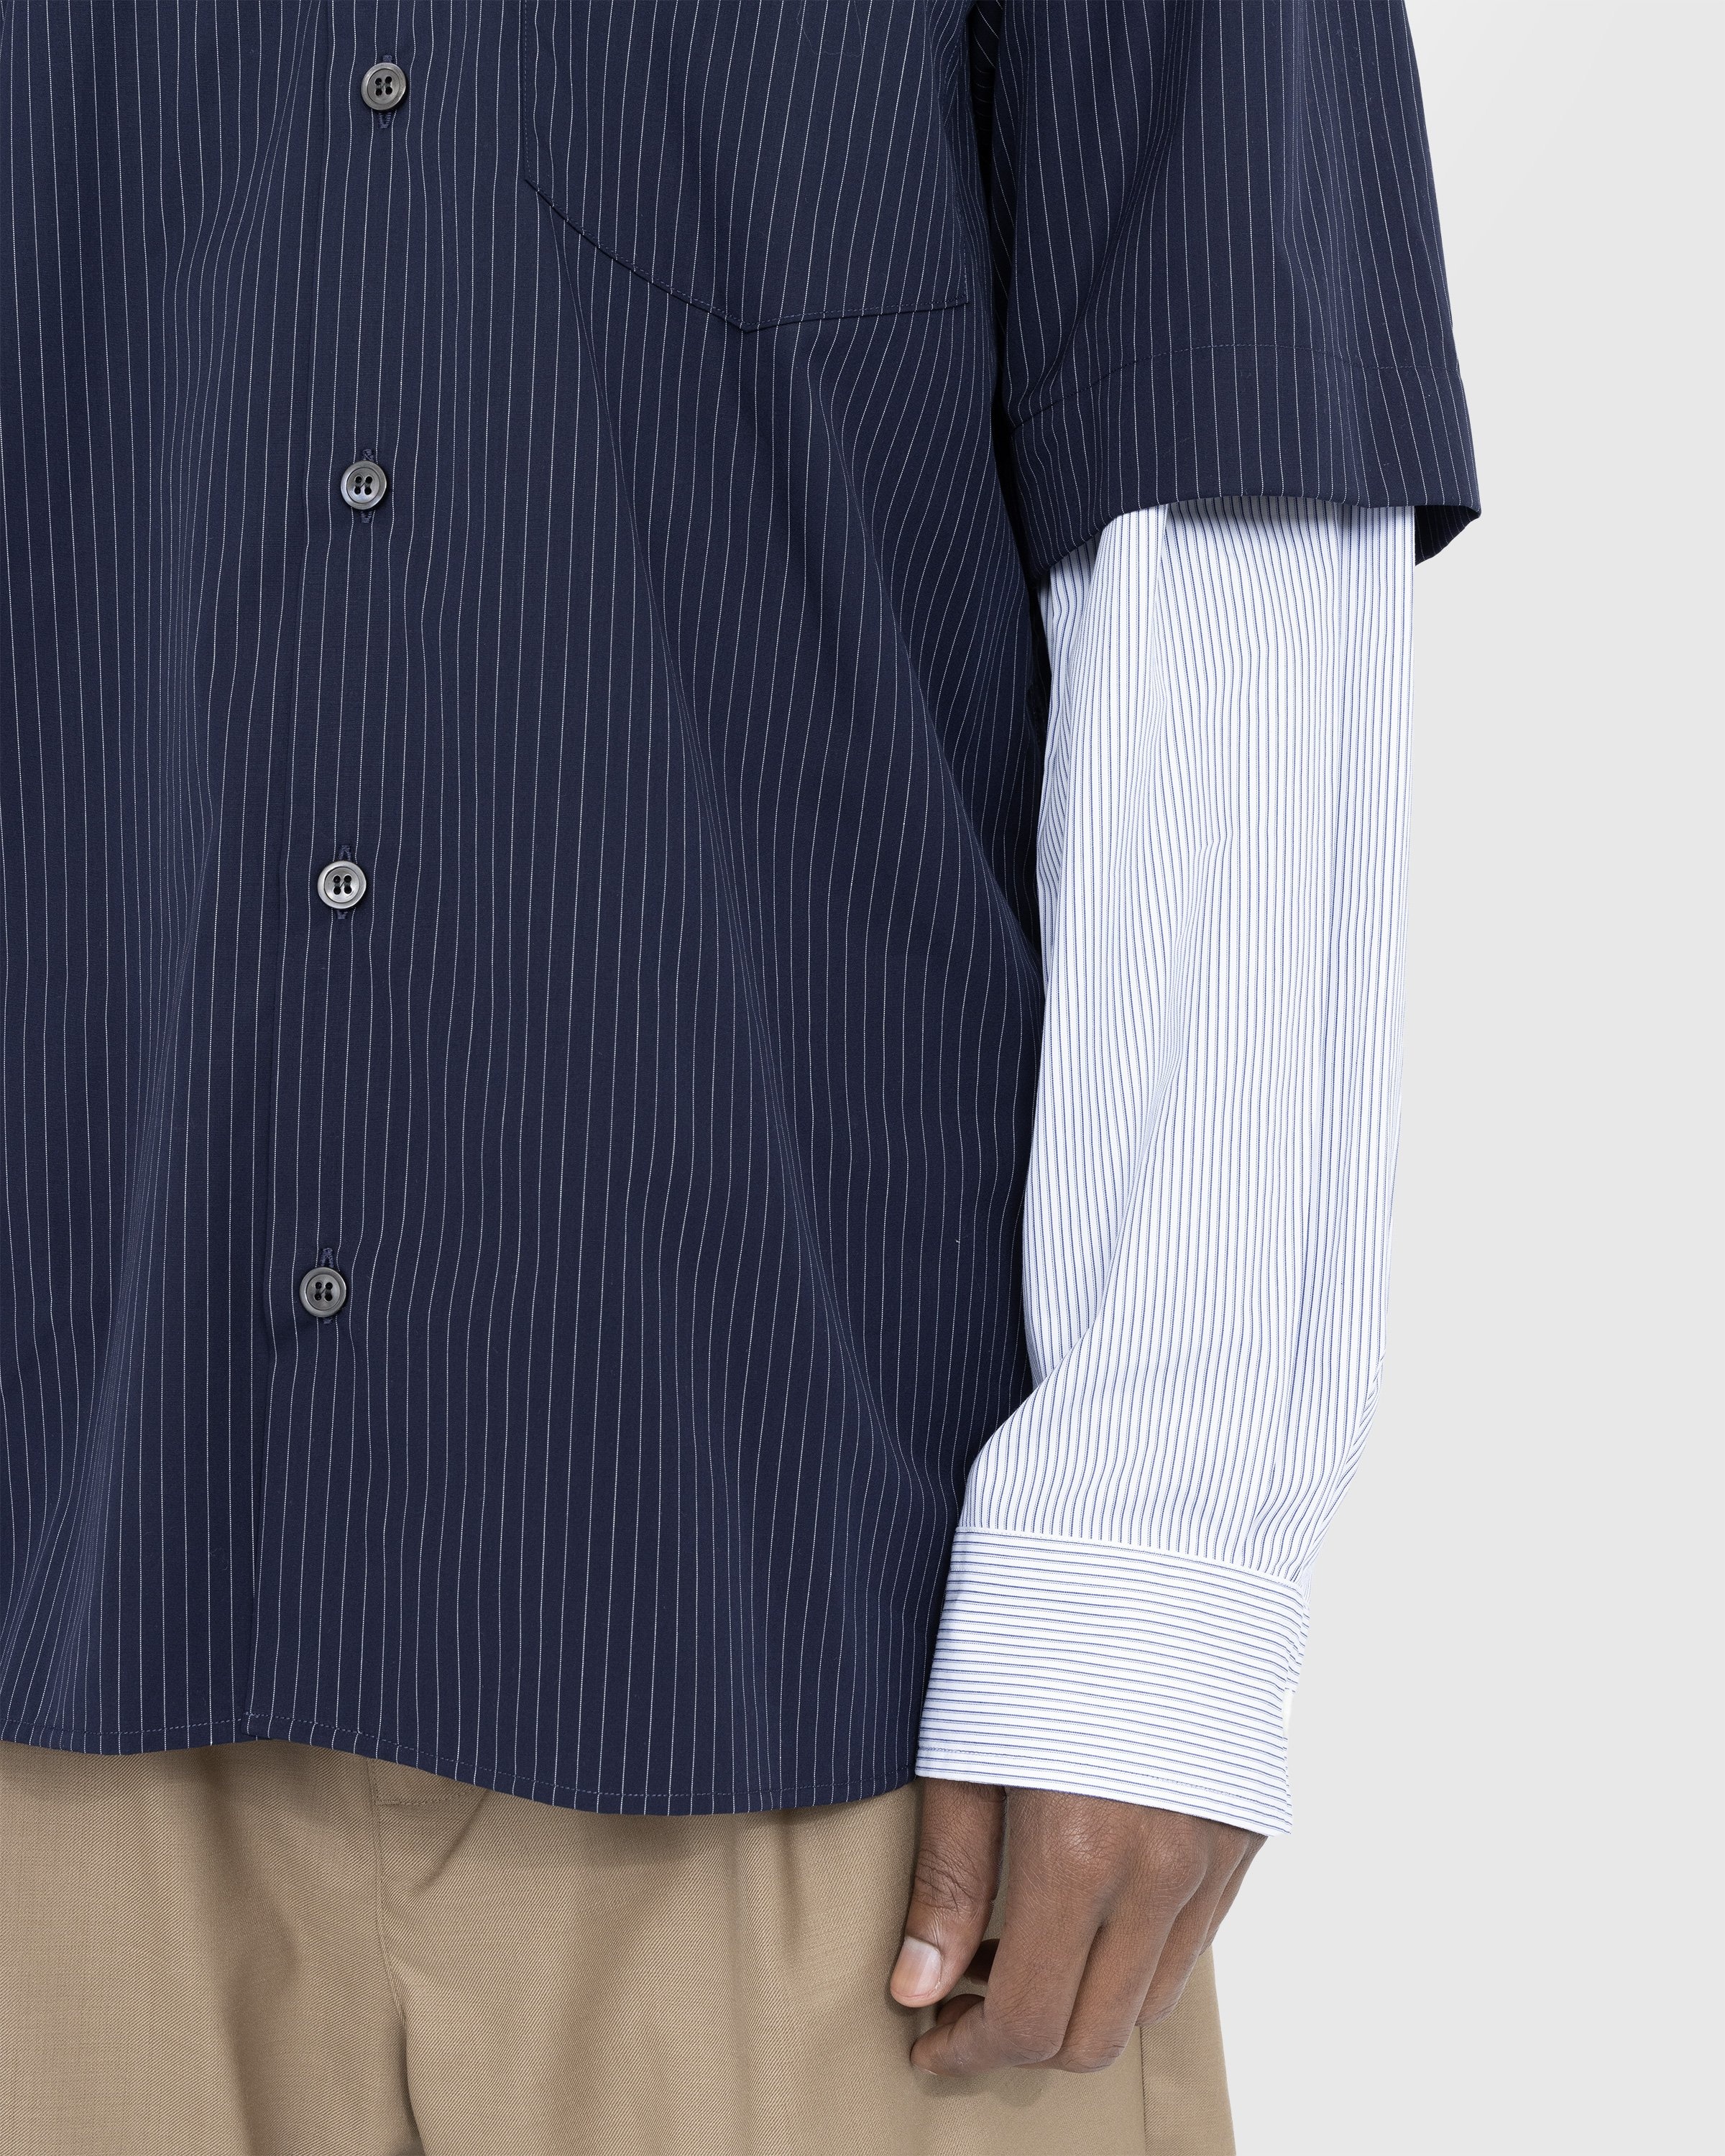 Dries van Noten – Carle Double Sleeve Shirt Navy - Shirts - Blue - Image 4